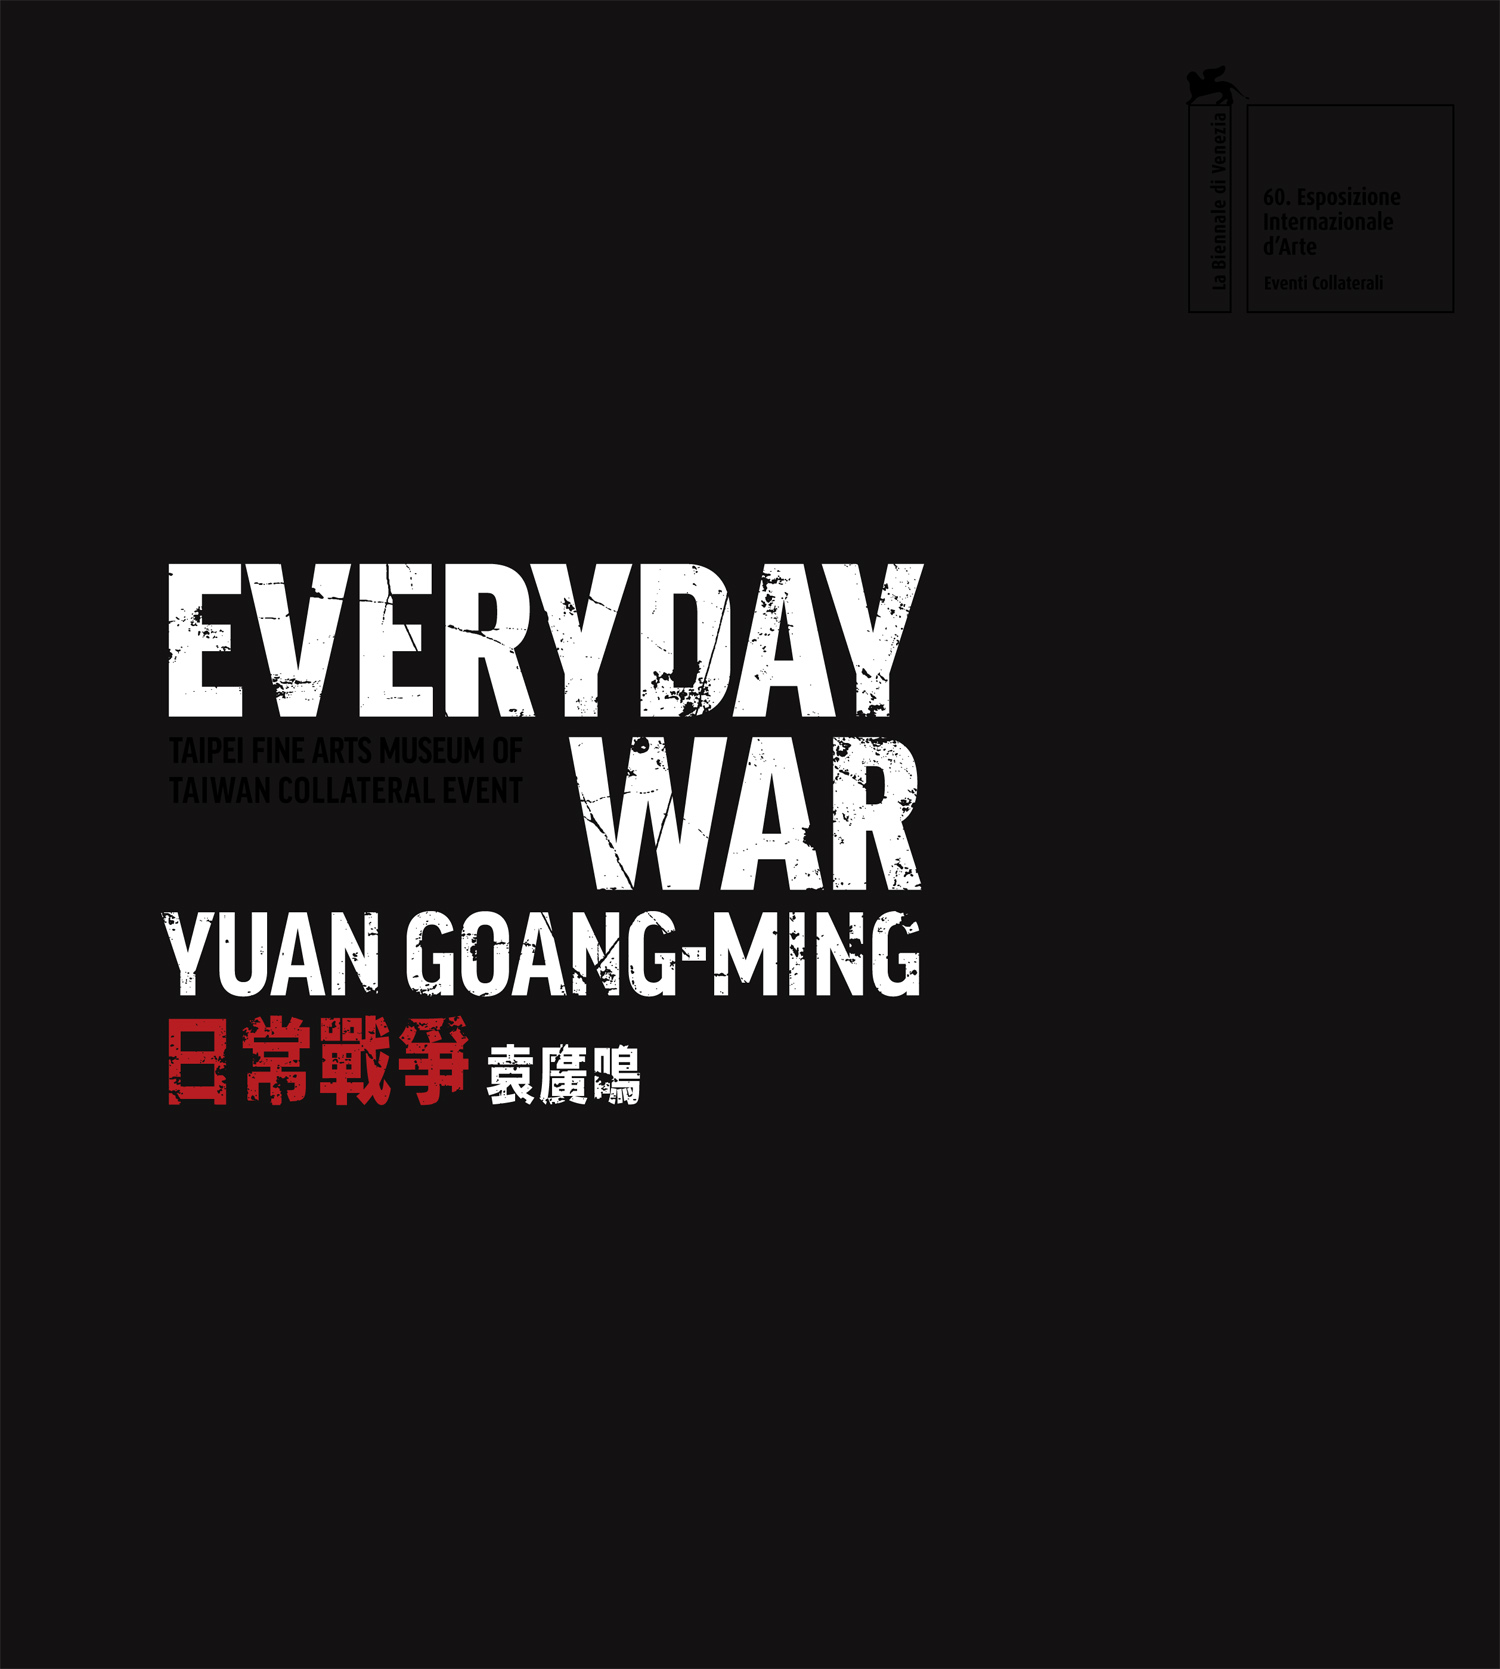 Yuan Goang-Ming: Everyday War 的圖說